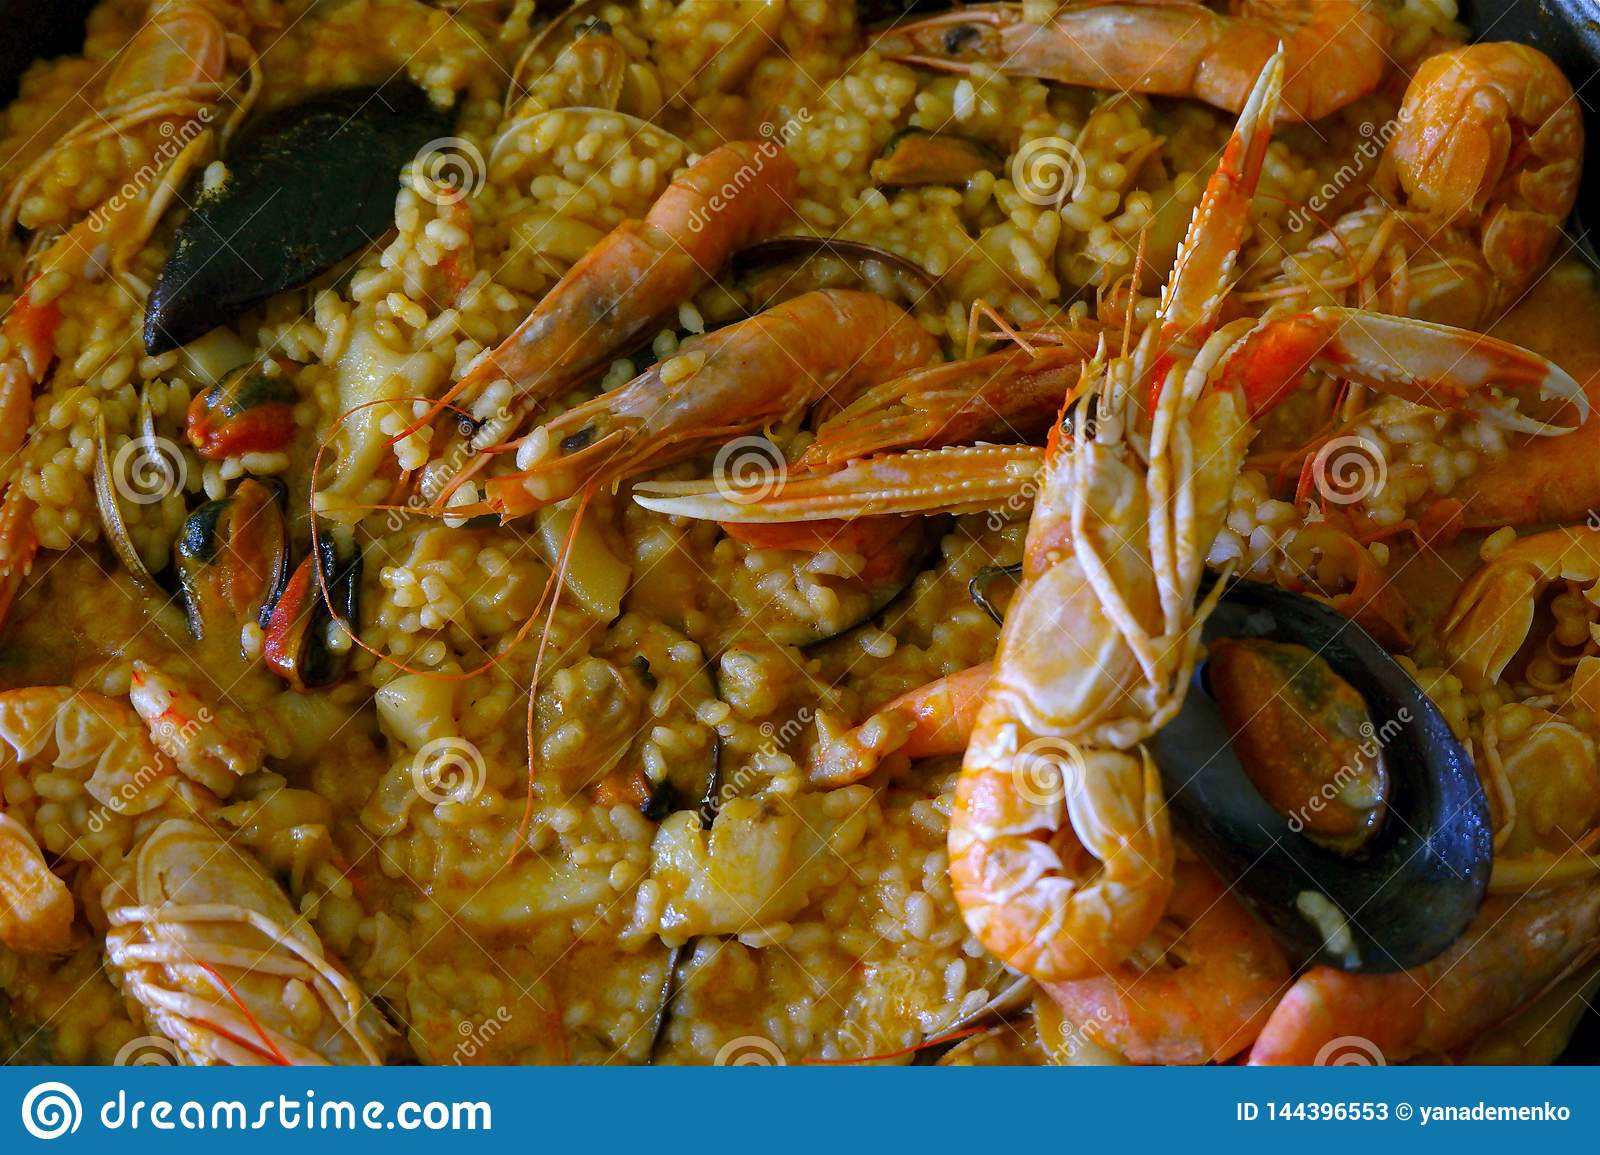 Spanish Rice Dish With Seafood
 Closeup Homemade Paella A Traditional Spanish Rice